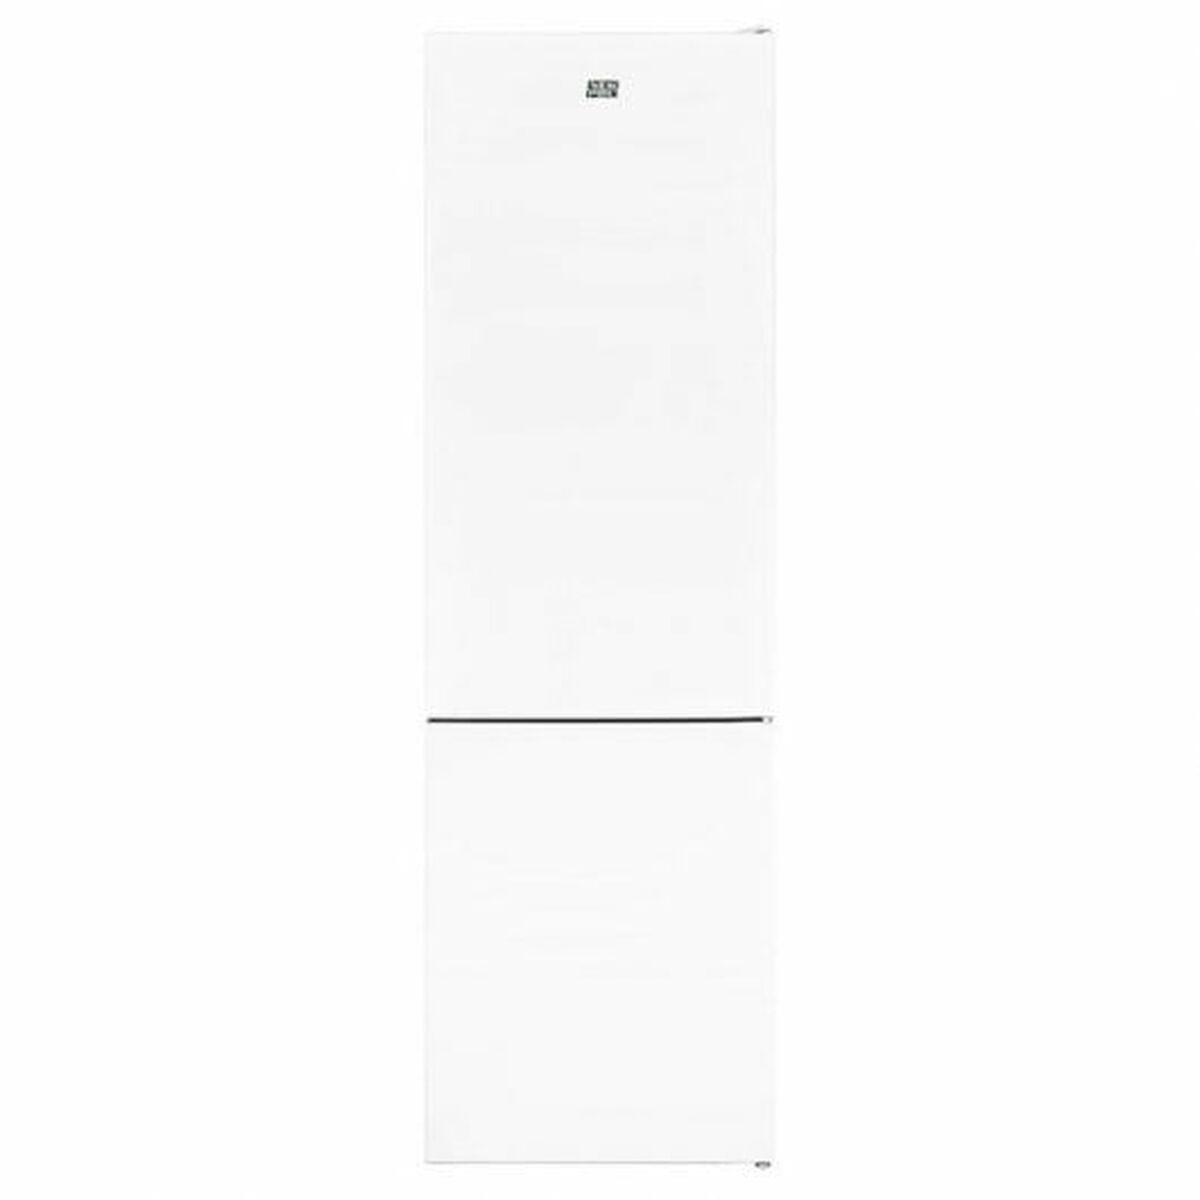 Комбинированный холодильник New Pol RE-22W.026A Белый